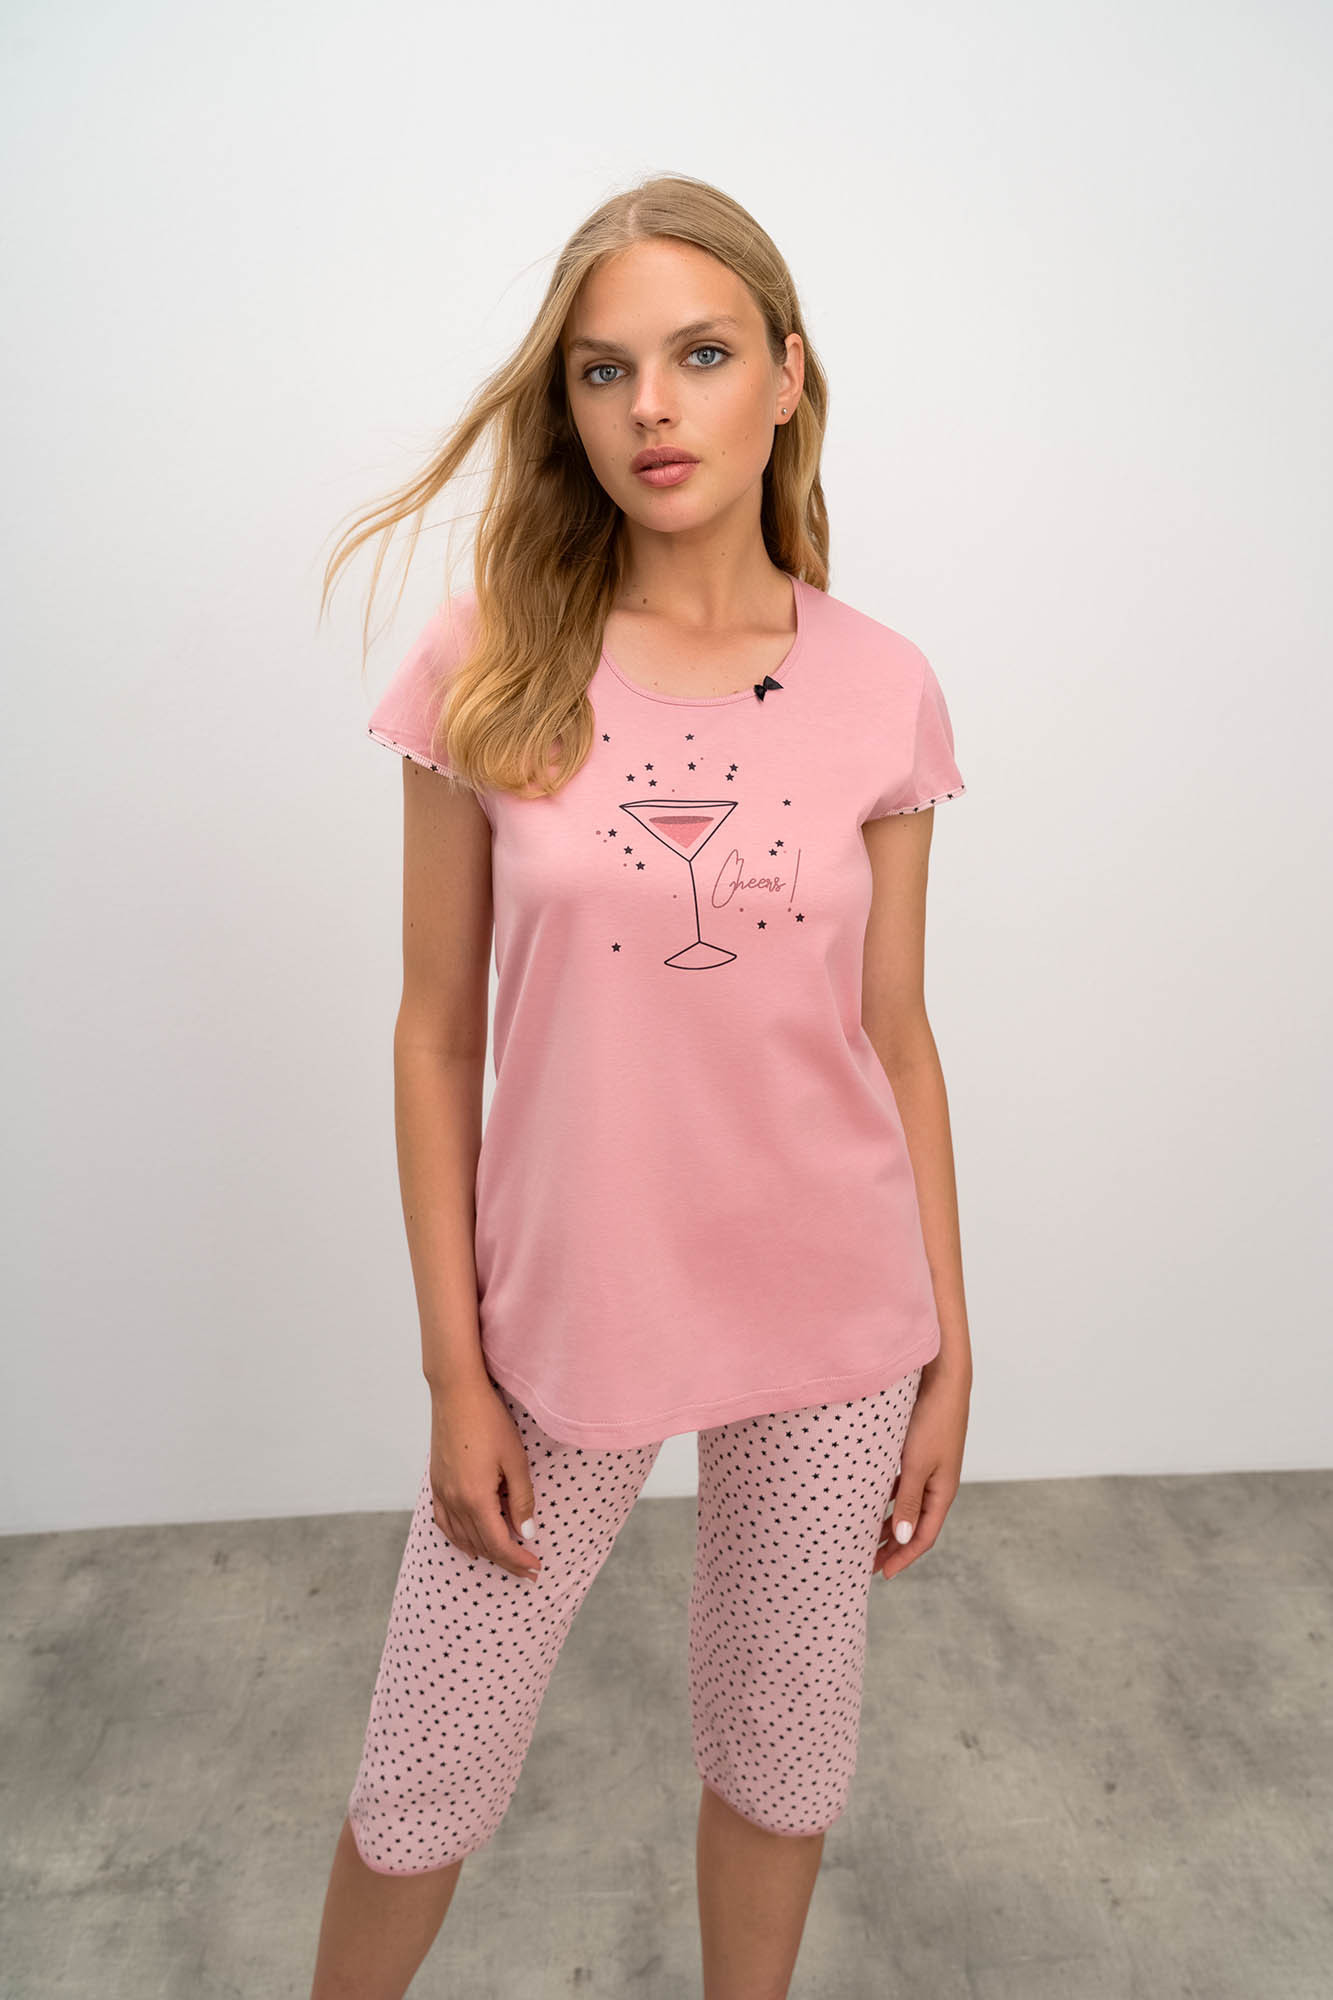 Vamp - Dvoudílné dámské pyžamo 16295 - Vamp pink gray M